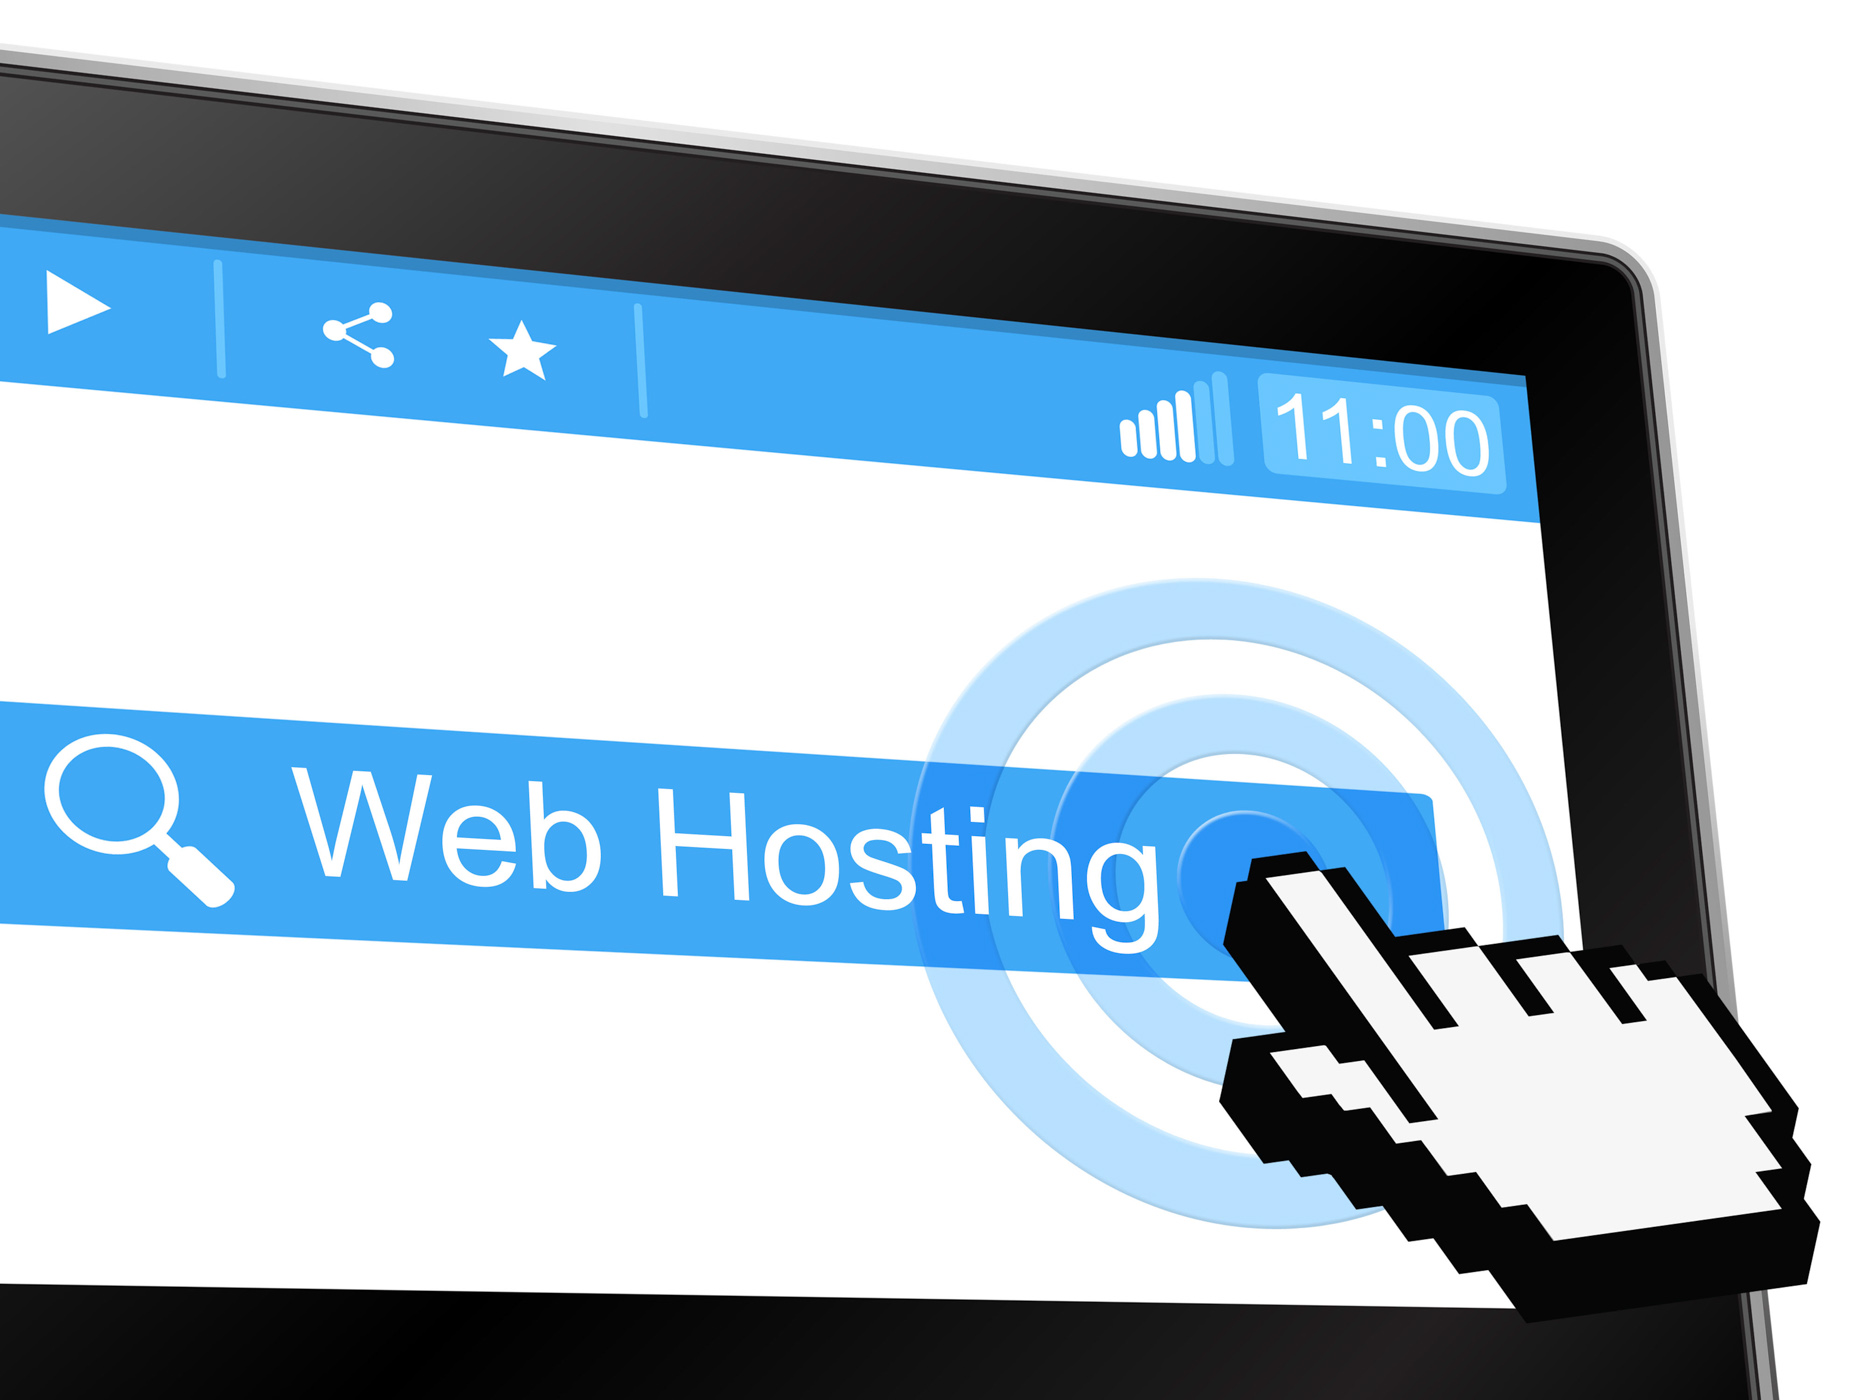 Web hosting represents www webhosting and webhost photo